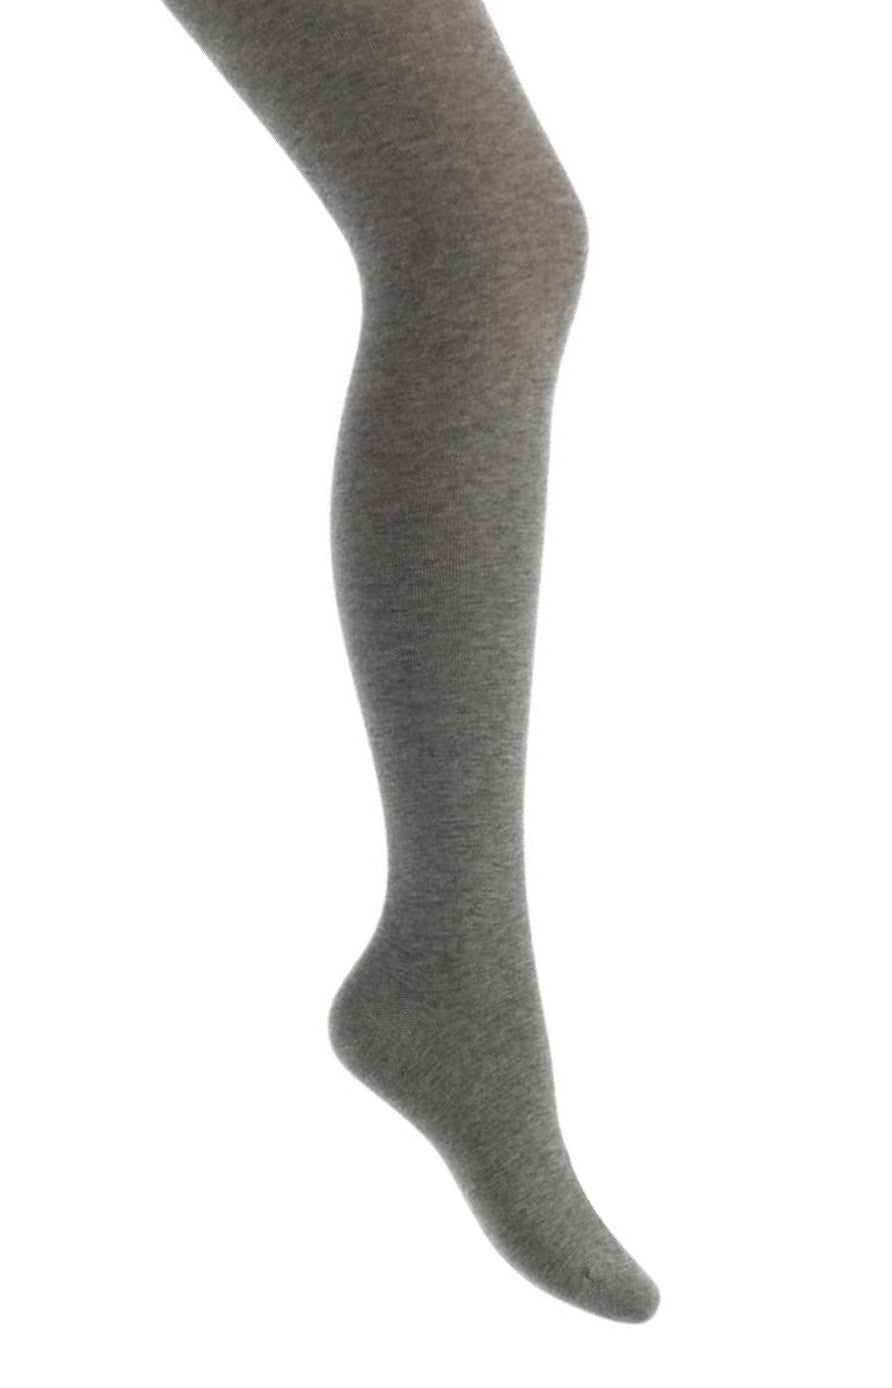 Bonnie Doon Cotton Tights - medium grey melange knitted Winter thermal warm tights